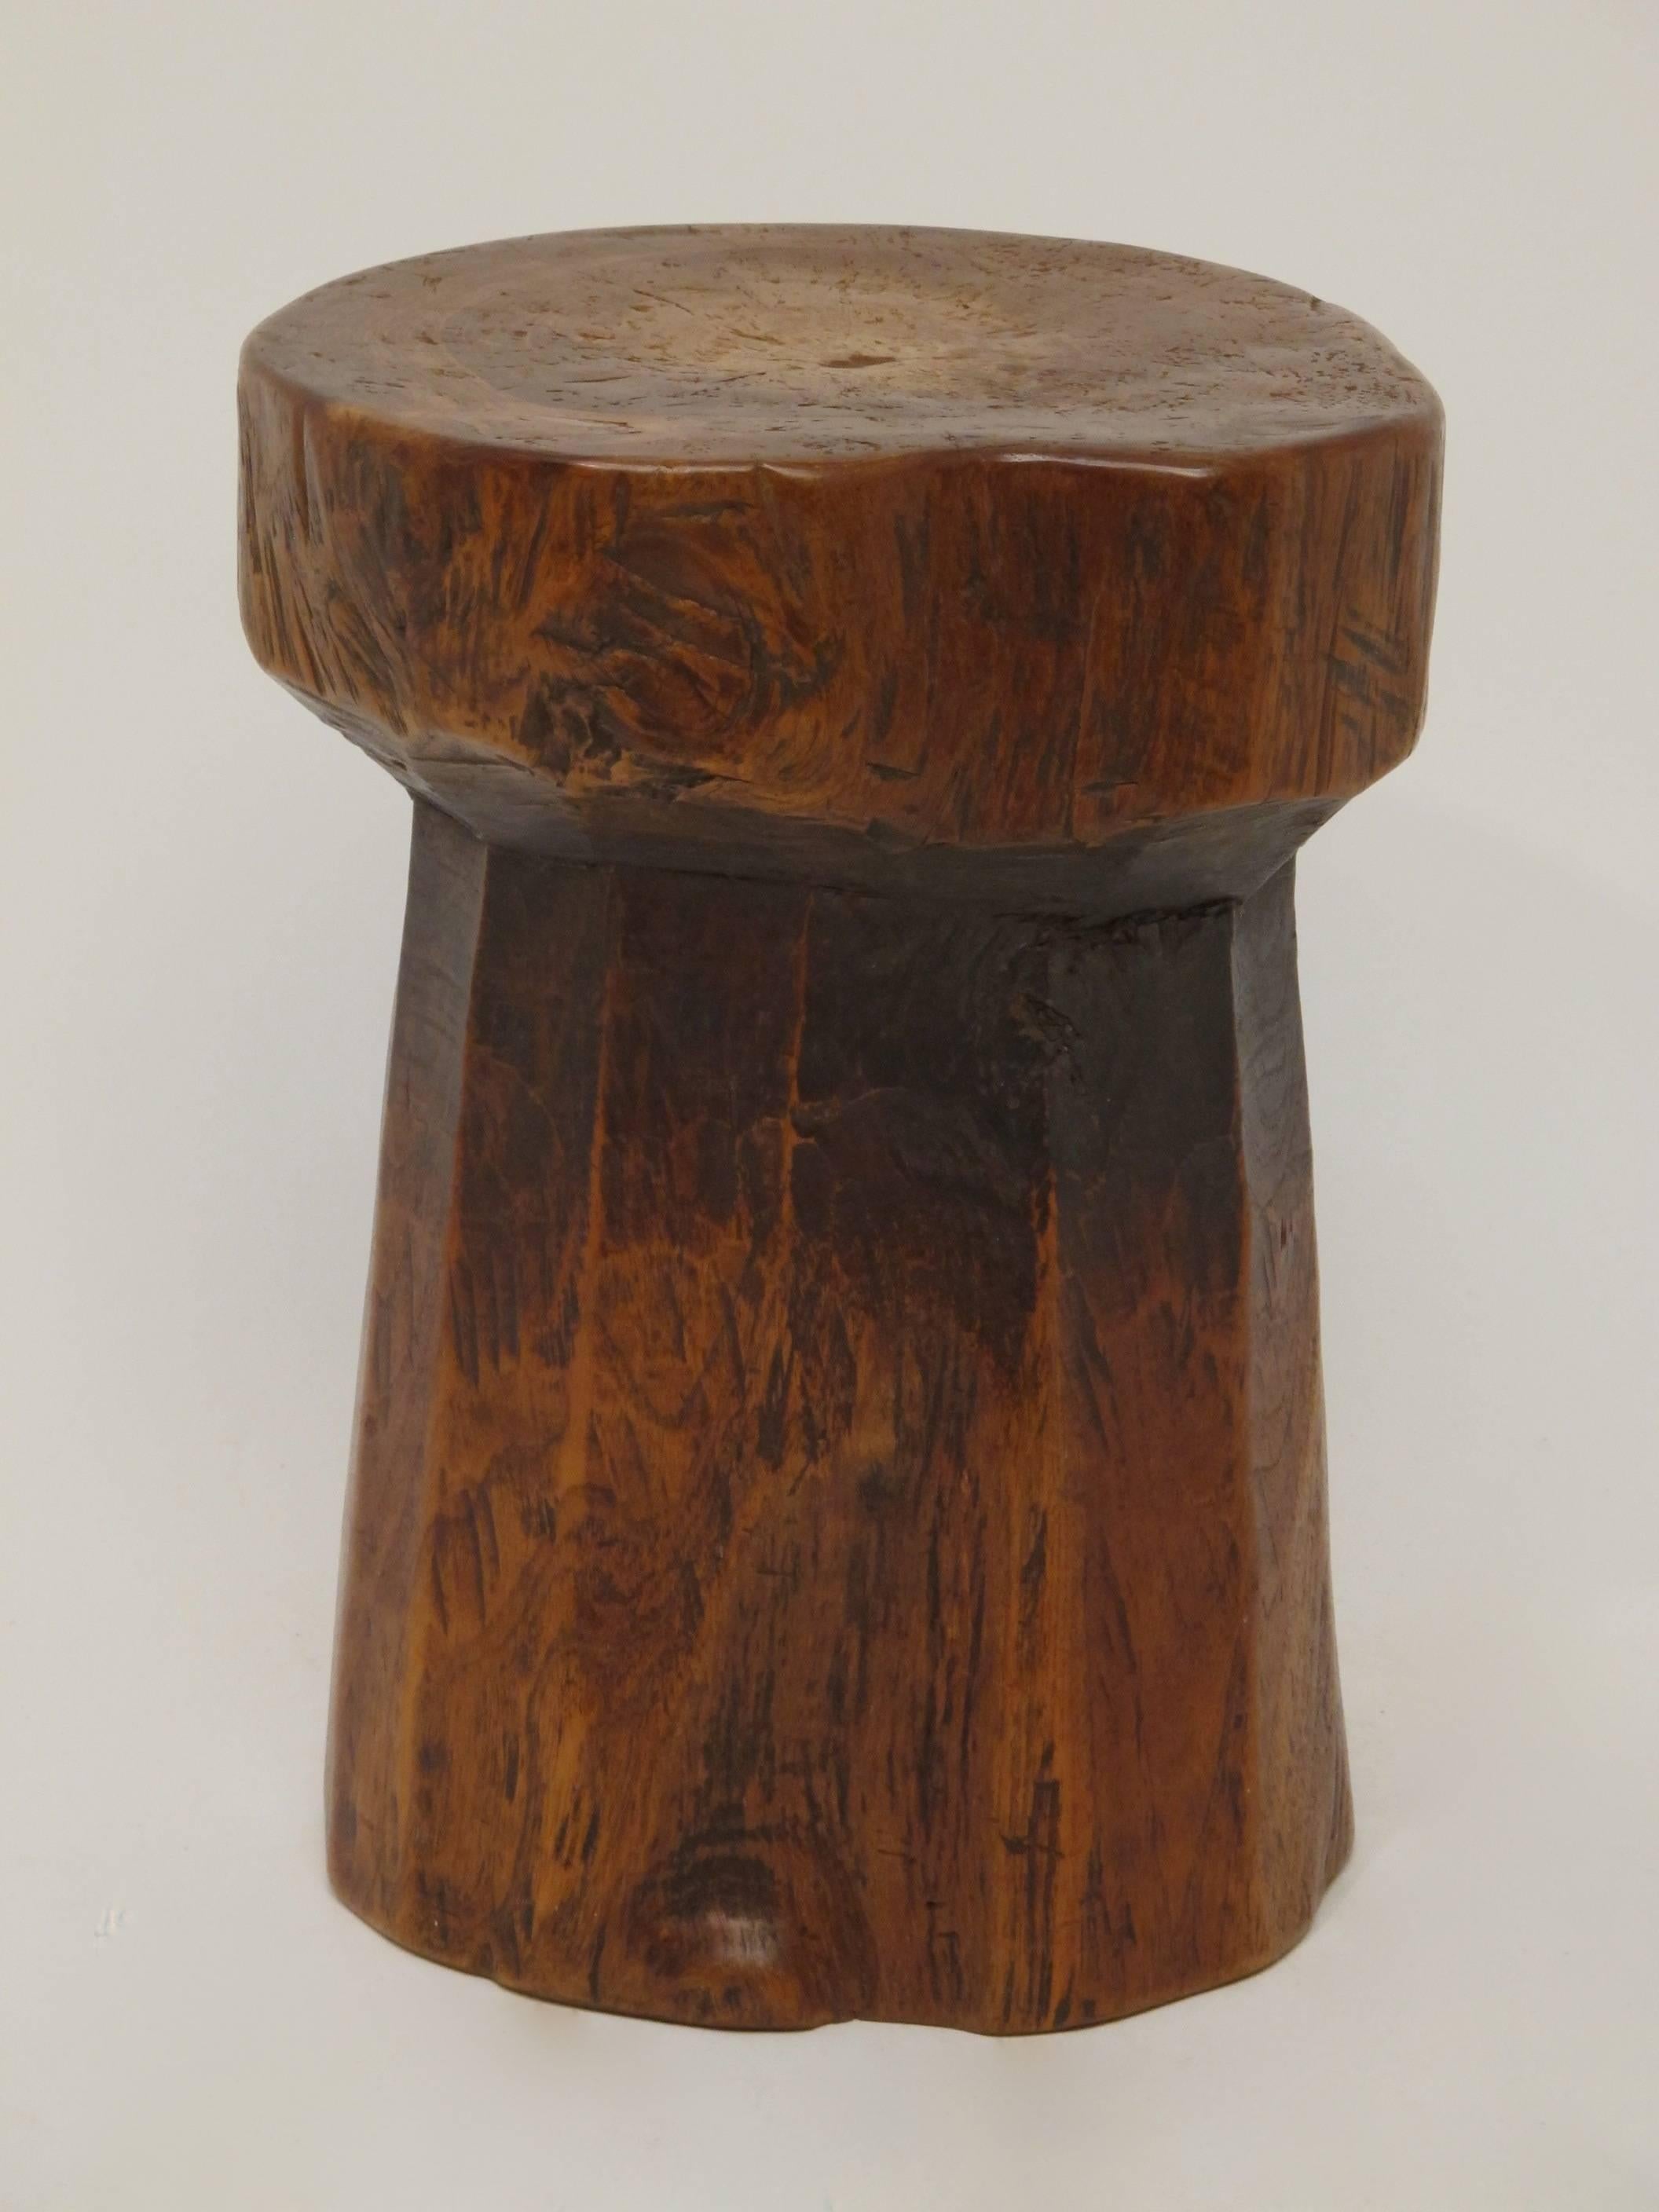 Carved 19th Century Japanese Elm Wood Stool